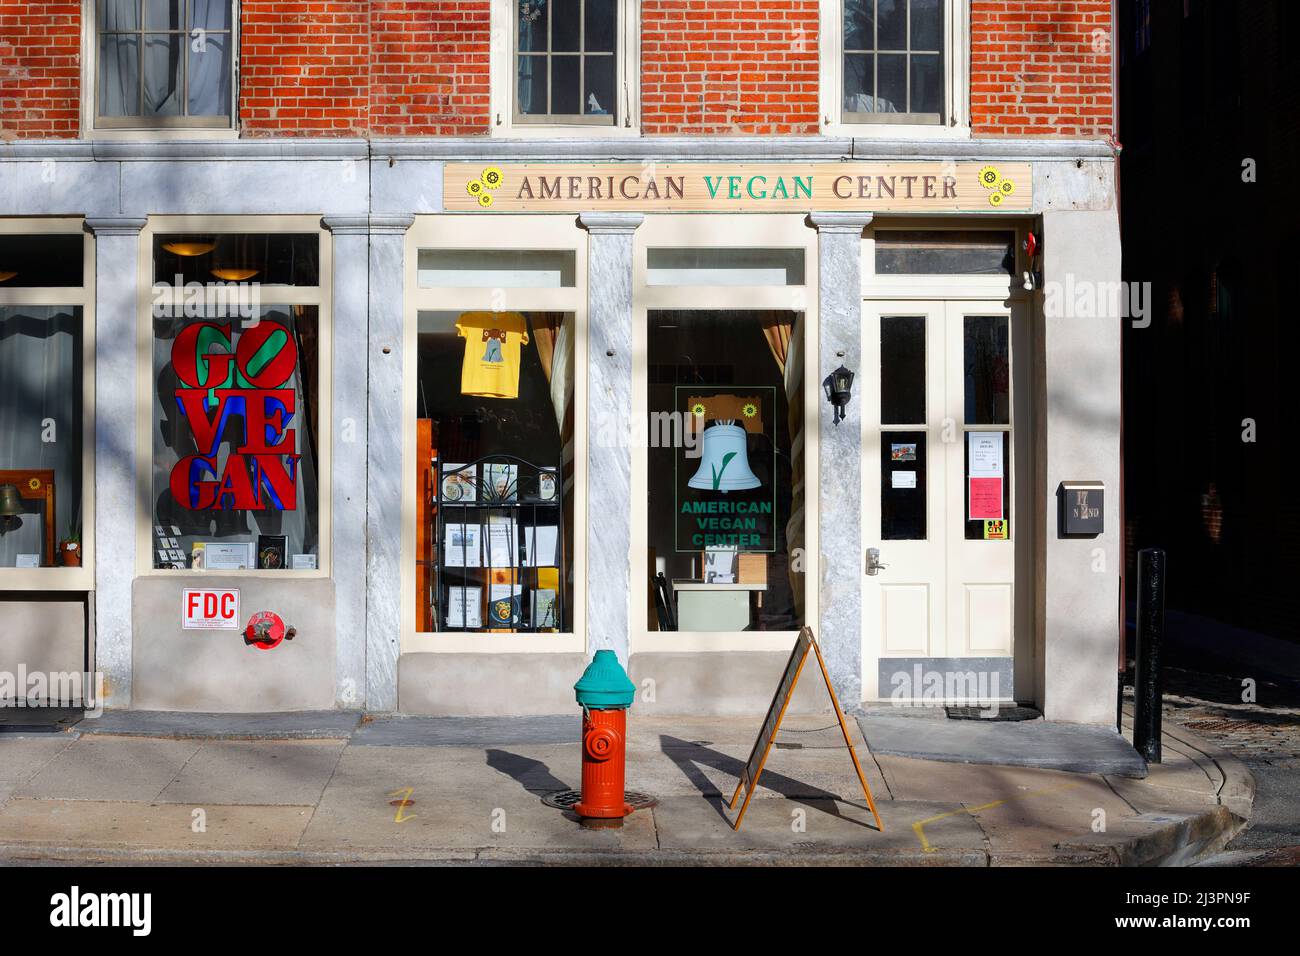 American Vegan Center, 17 N 2nd St, Philadelphia, Pennsylvania. exterior storefront of a vegan advocacy center in Old Town, Center City. Stock Photo